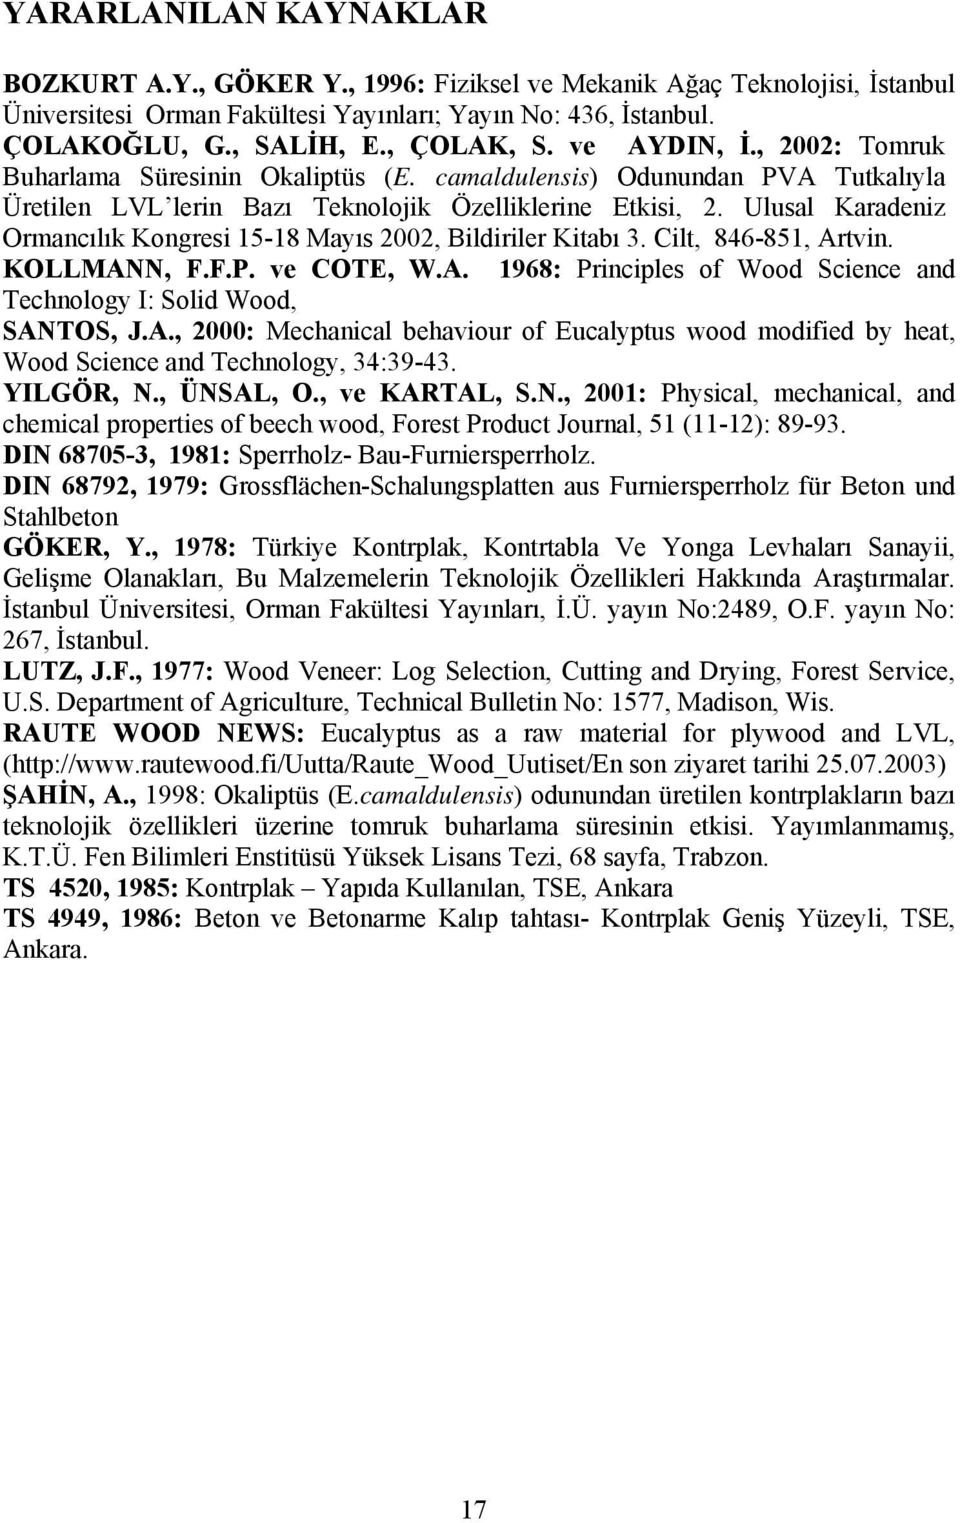 Ulusal Karadeniz Ormancılık Kongresi 15-18 Mayıs 2002, Bildiriler Kitabı 3. Cilt, 846-851, Artvin. KOLLMANN, F.F.P. ve COTE, W.A. 1968: Principles of Wood Science and Technology I: Solid Wood, SANTOS, J.